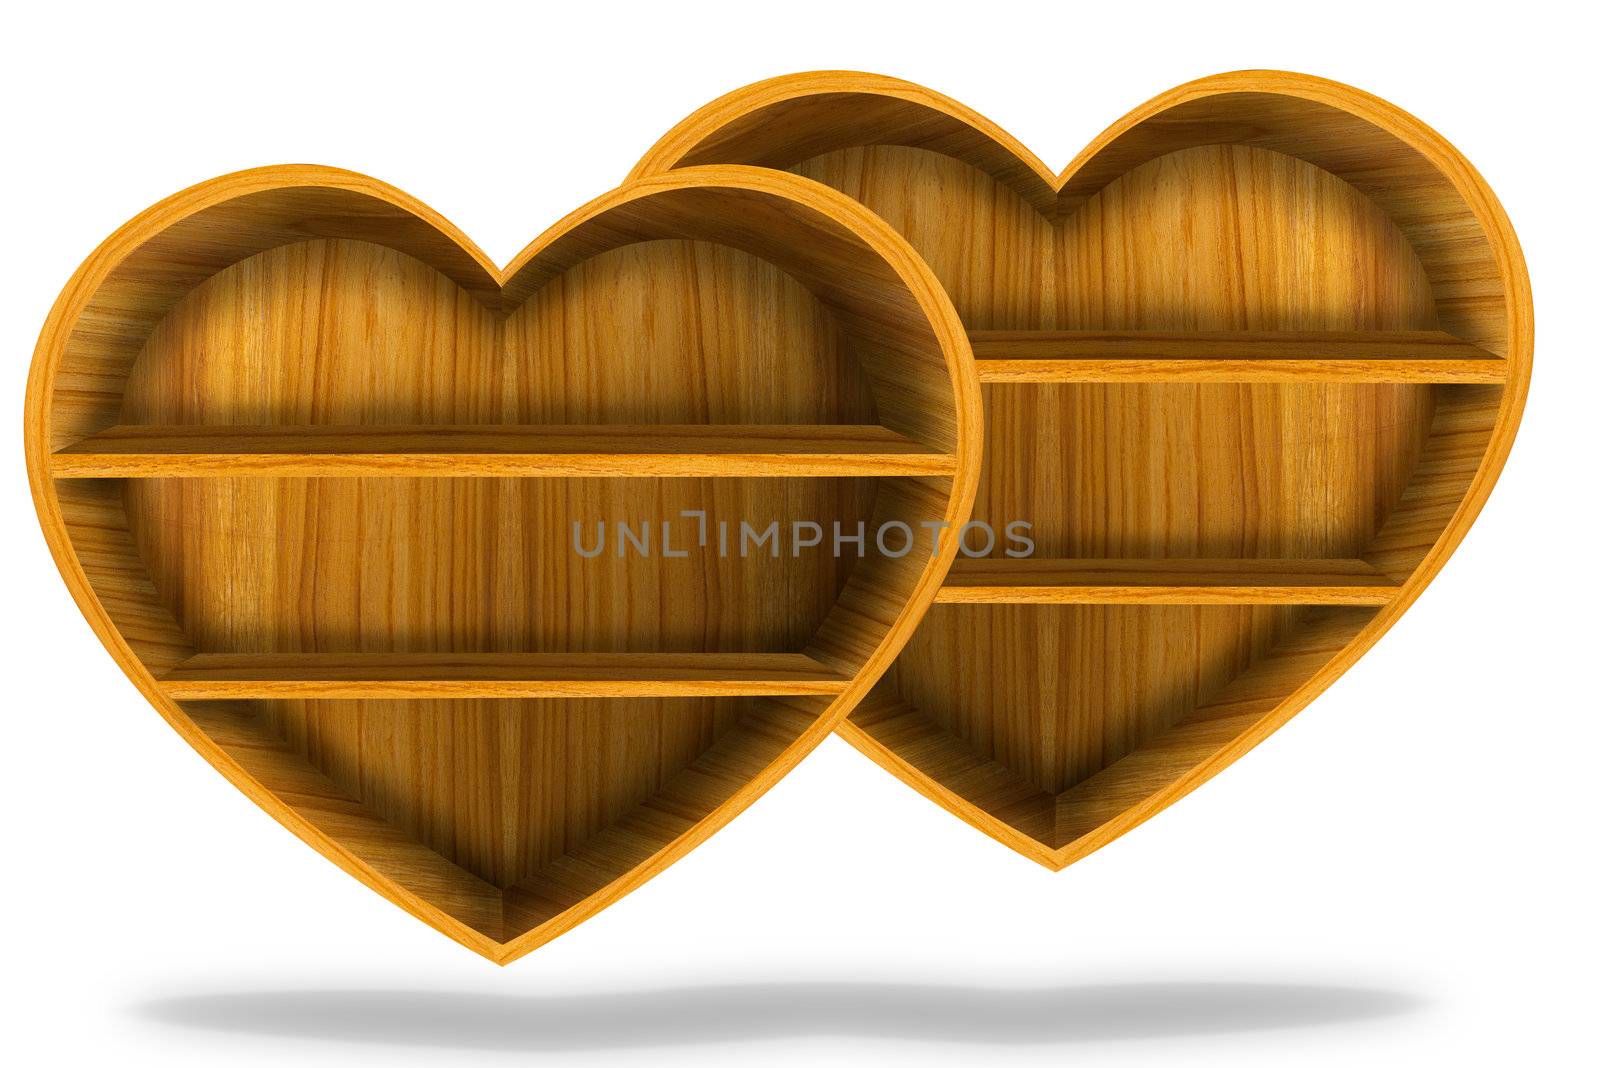 Wooden heart  shelf  by Suriyaphoto